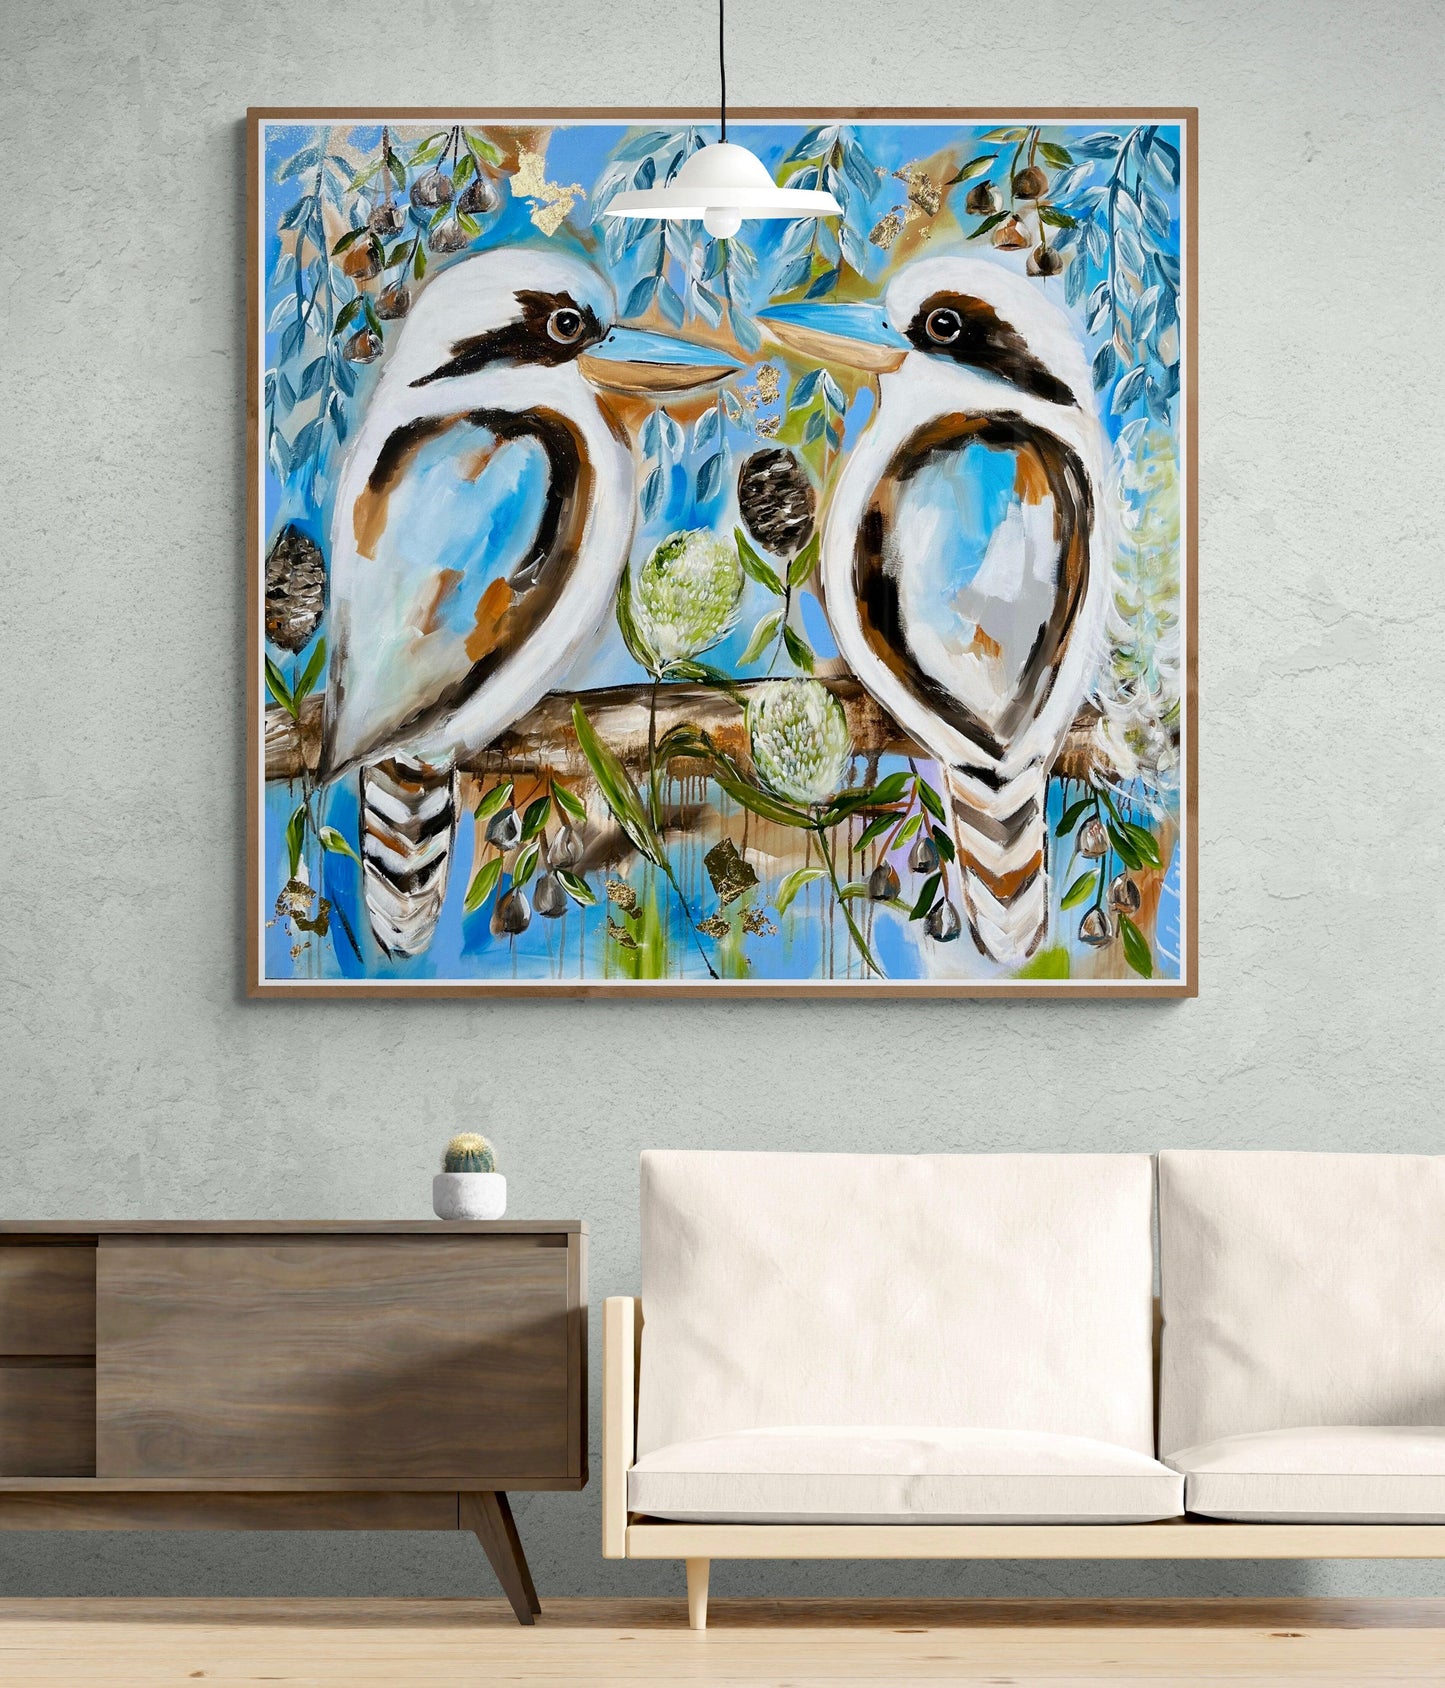 Blue Kookaburra - 1.1x1m -Original Artwork - Available by Commission